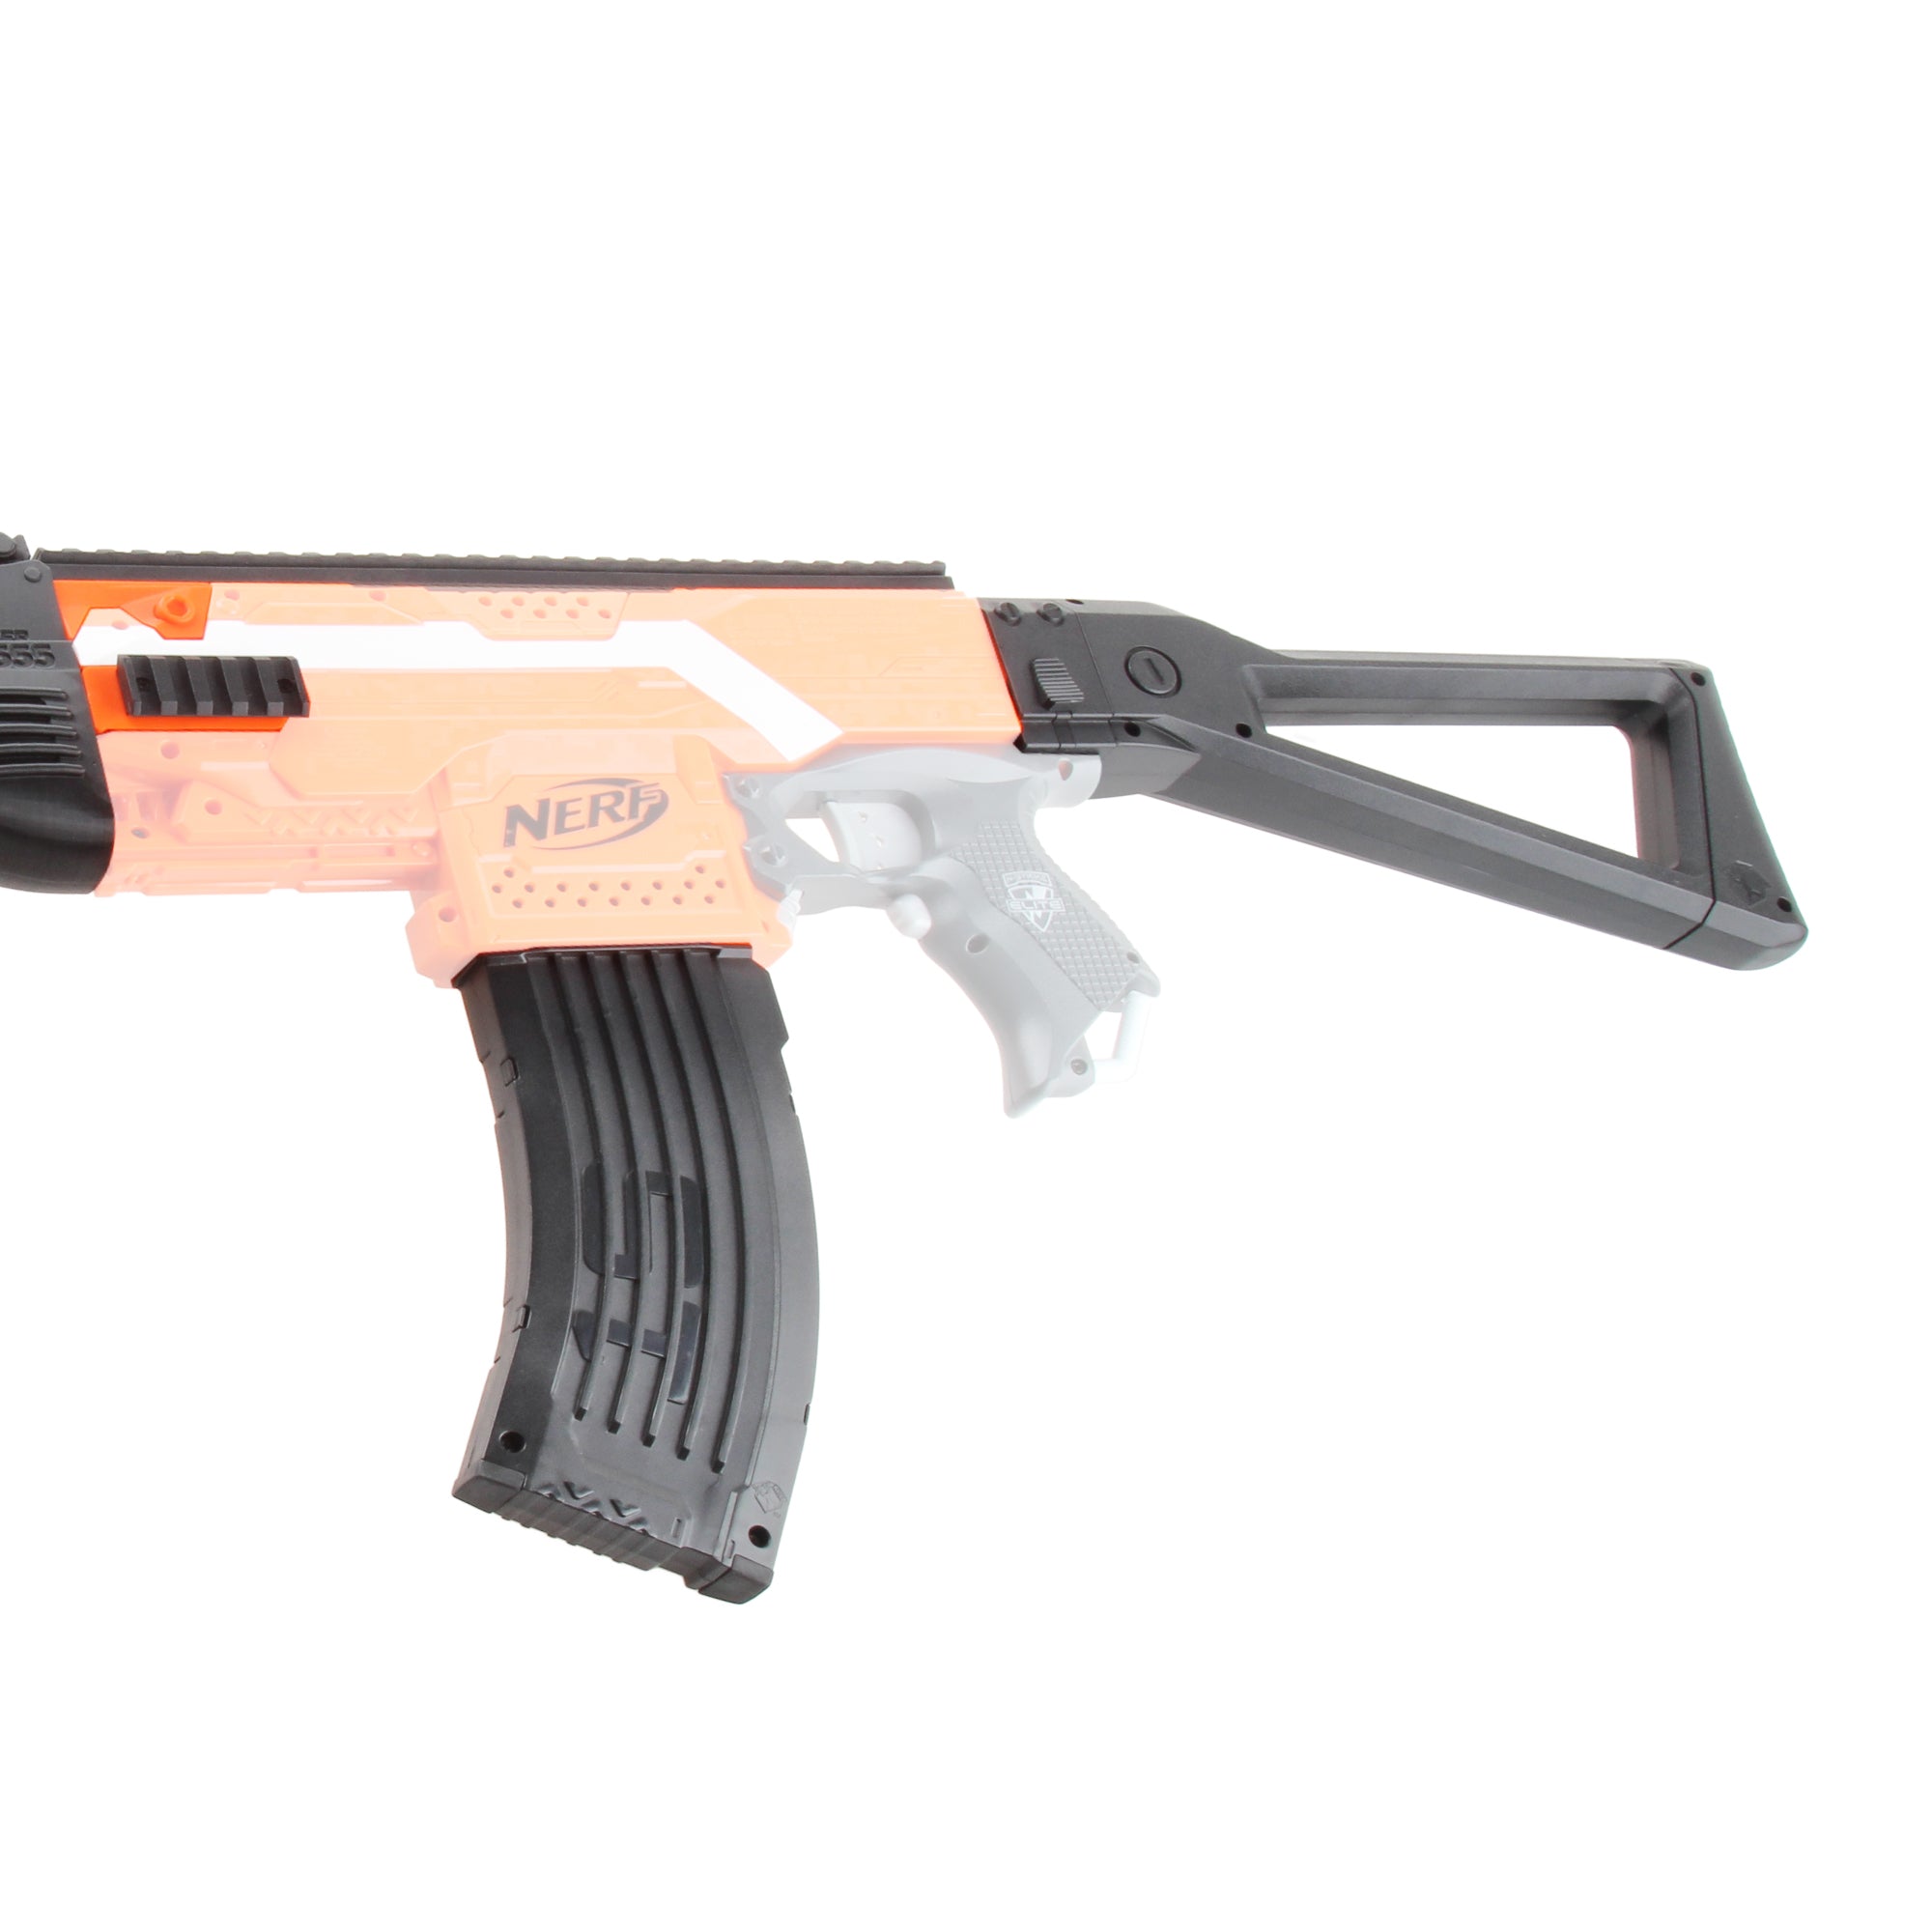 Worker Mod DIY Imitation Kits AK Style (AK Stock) Combo 9 Items No.105 C kits for Nerf Stryfe Modify Toy - BlasterMOD